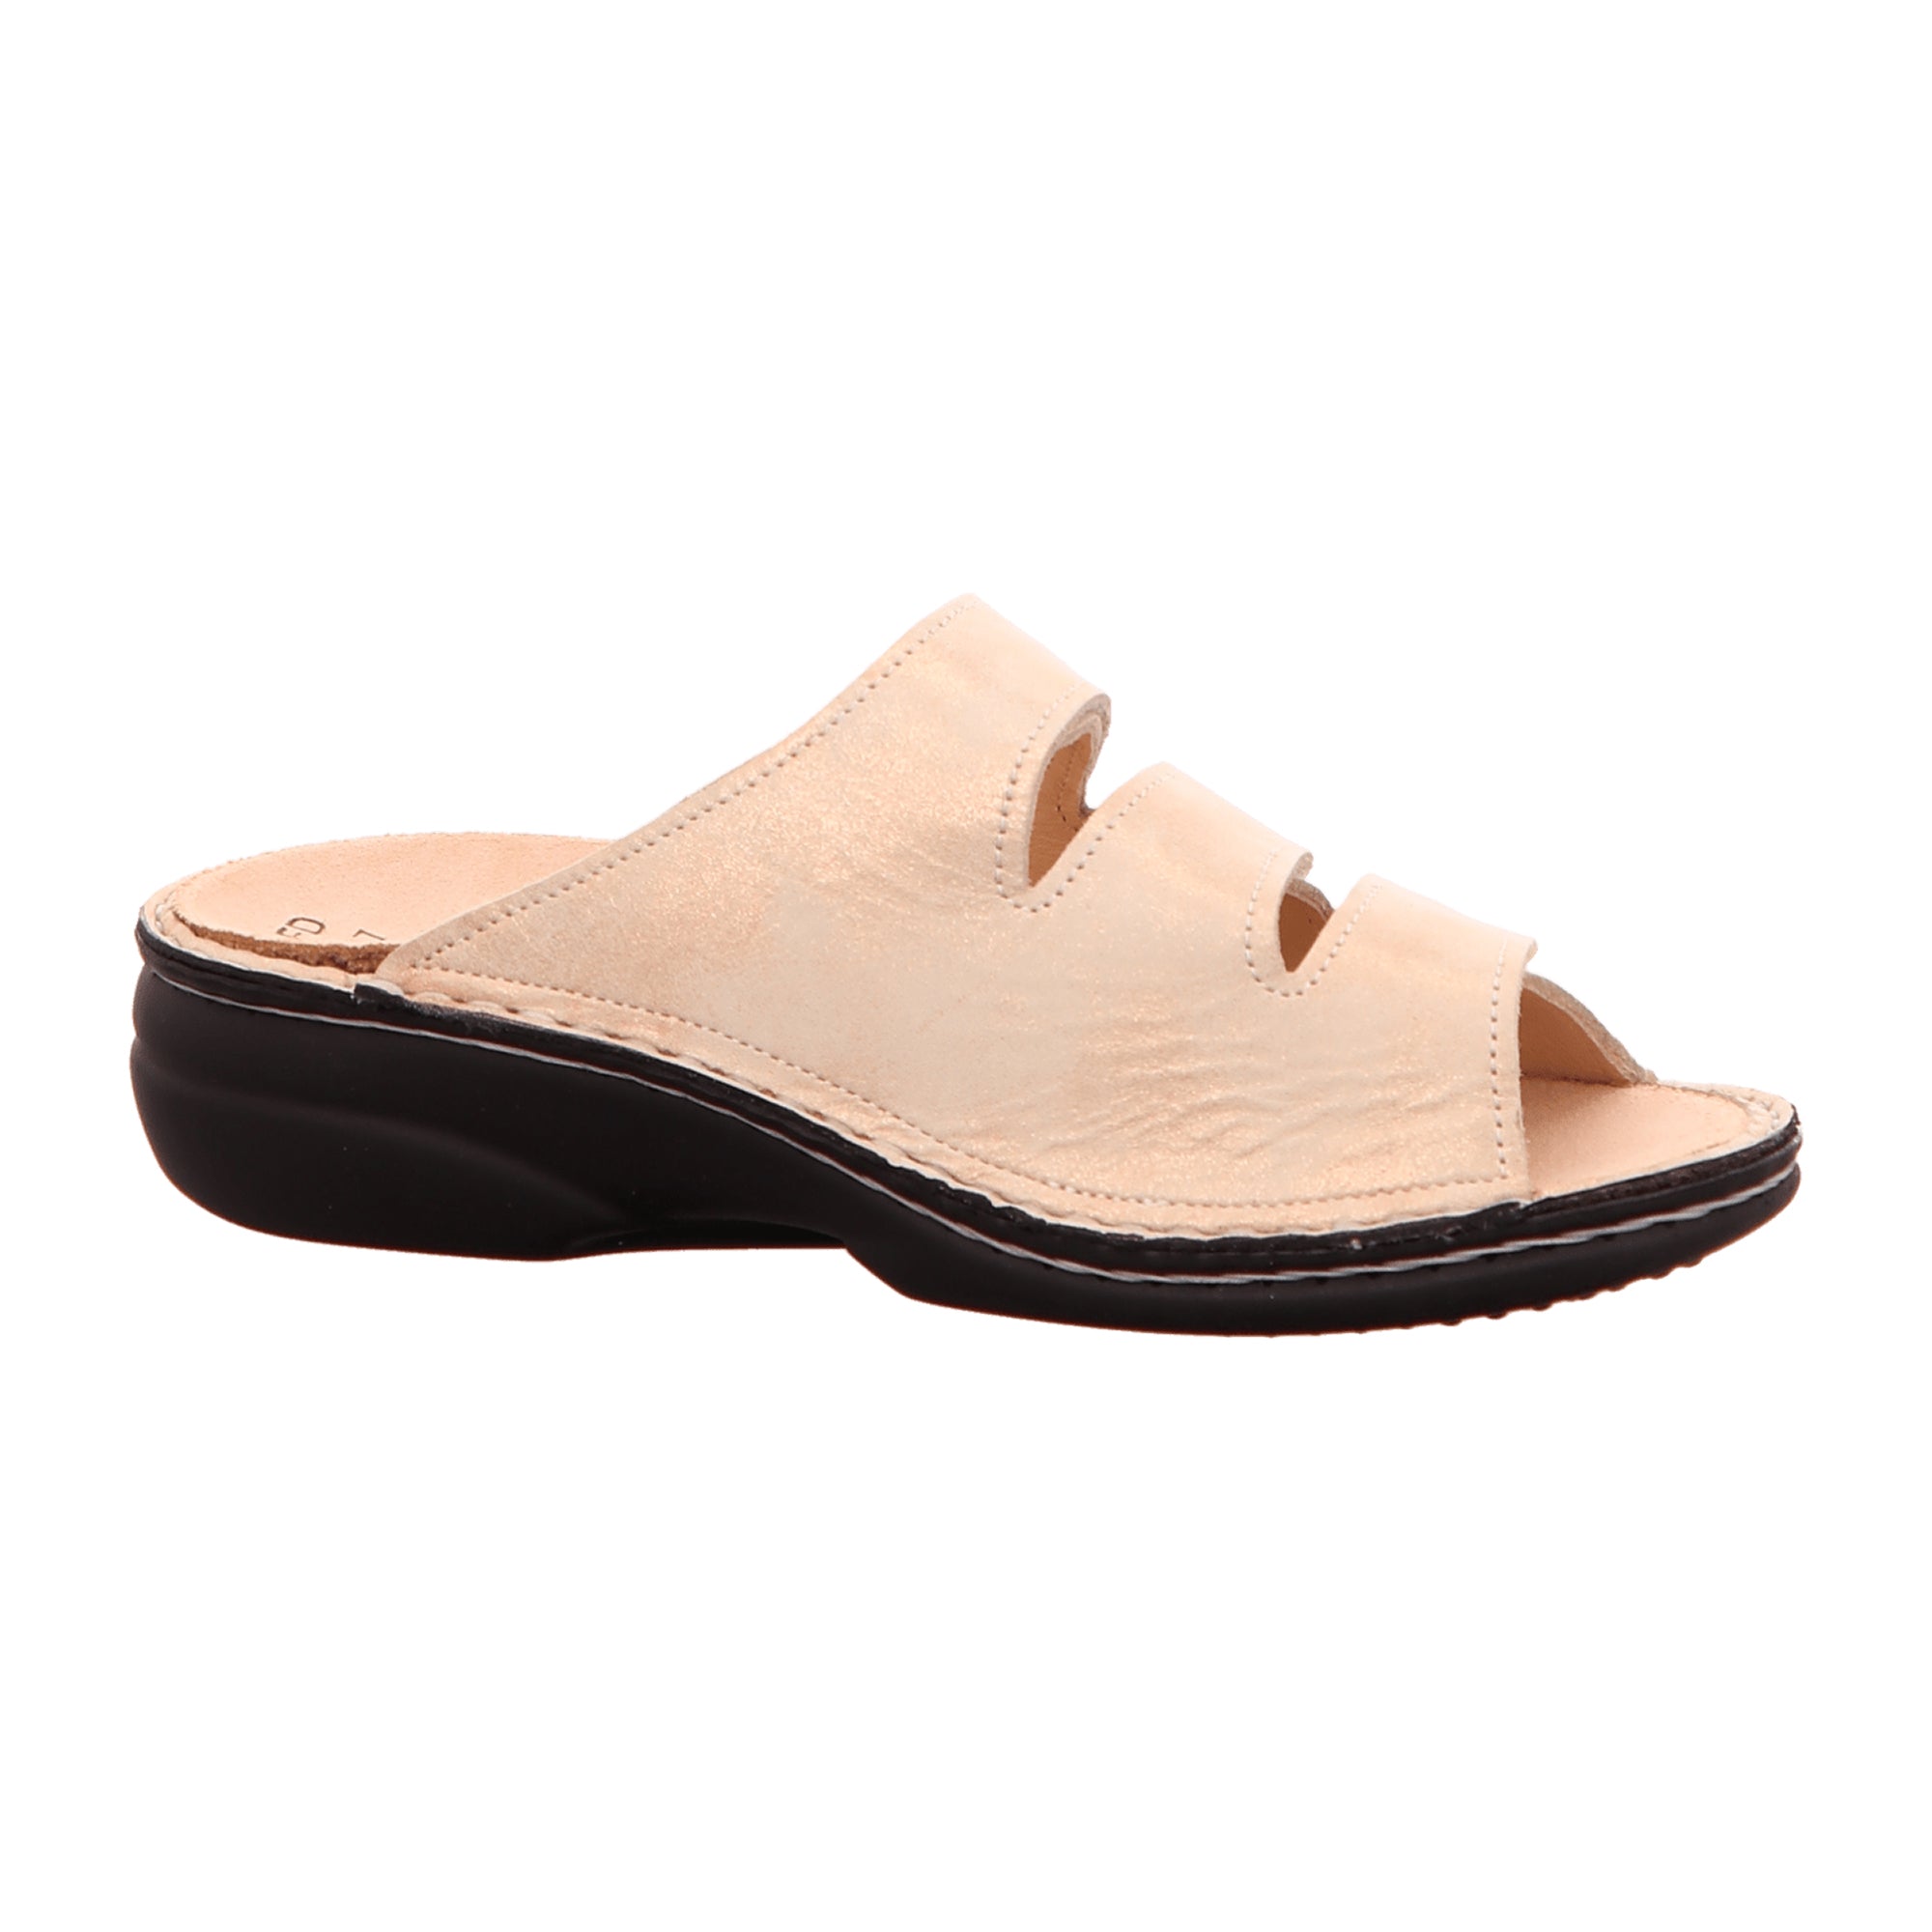 Finn Comfort Women's Beige Comfort Shoes 2554-902561 - Fashionable & Durable